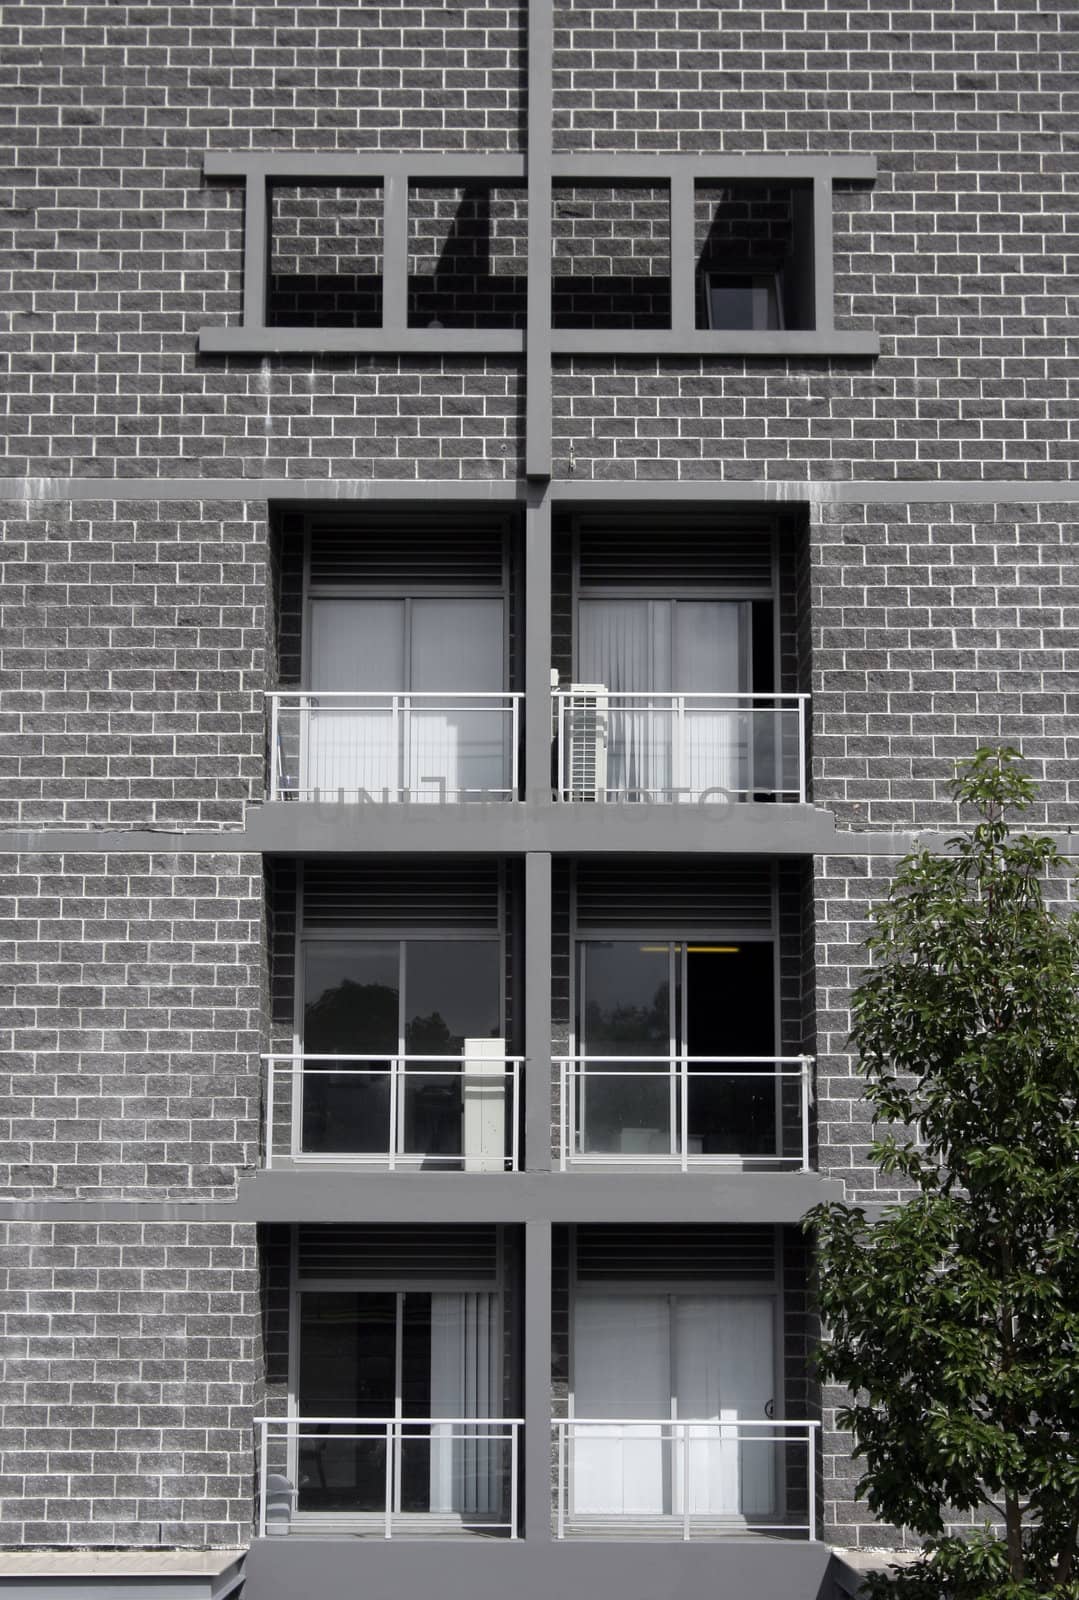 Urban Apartment Building by thorsten